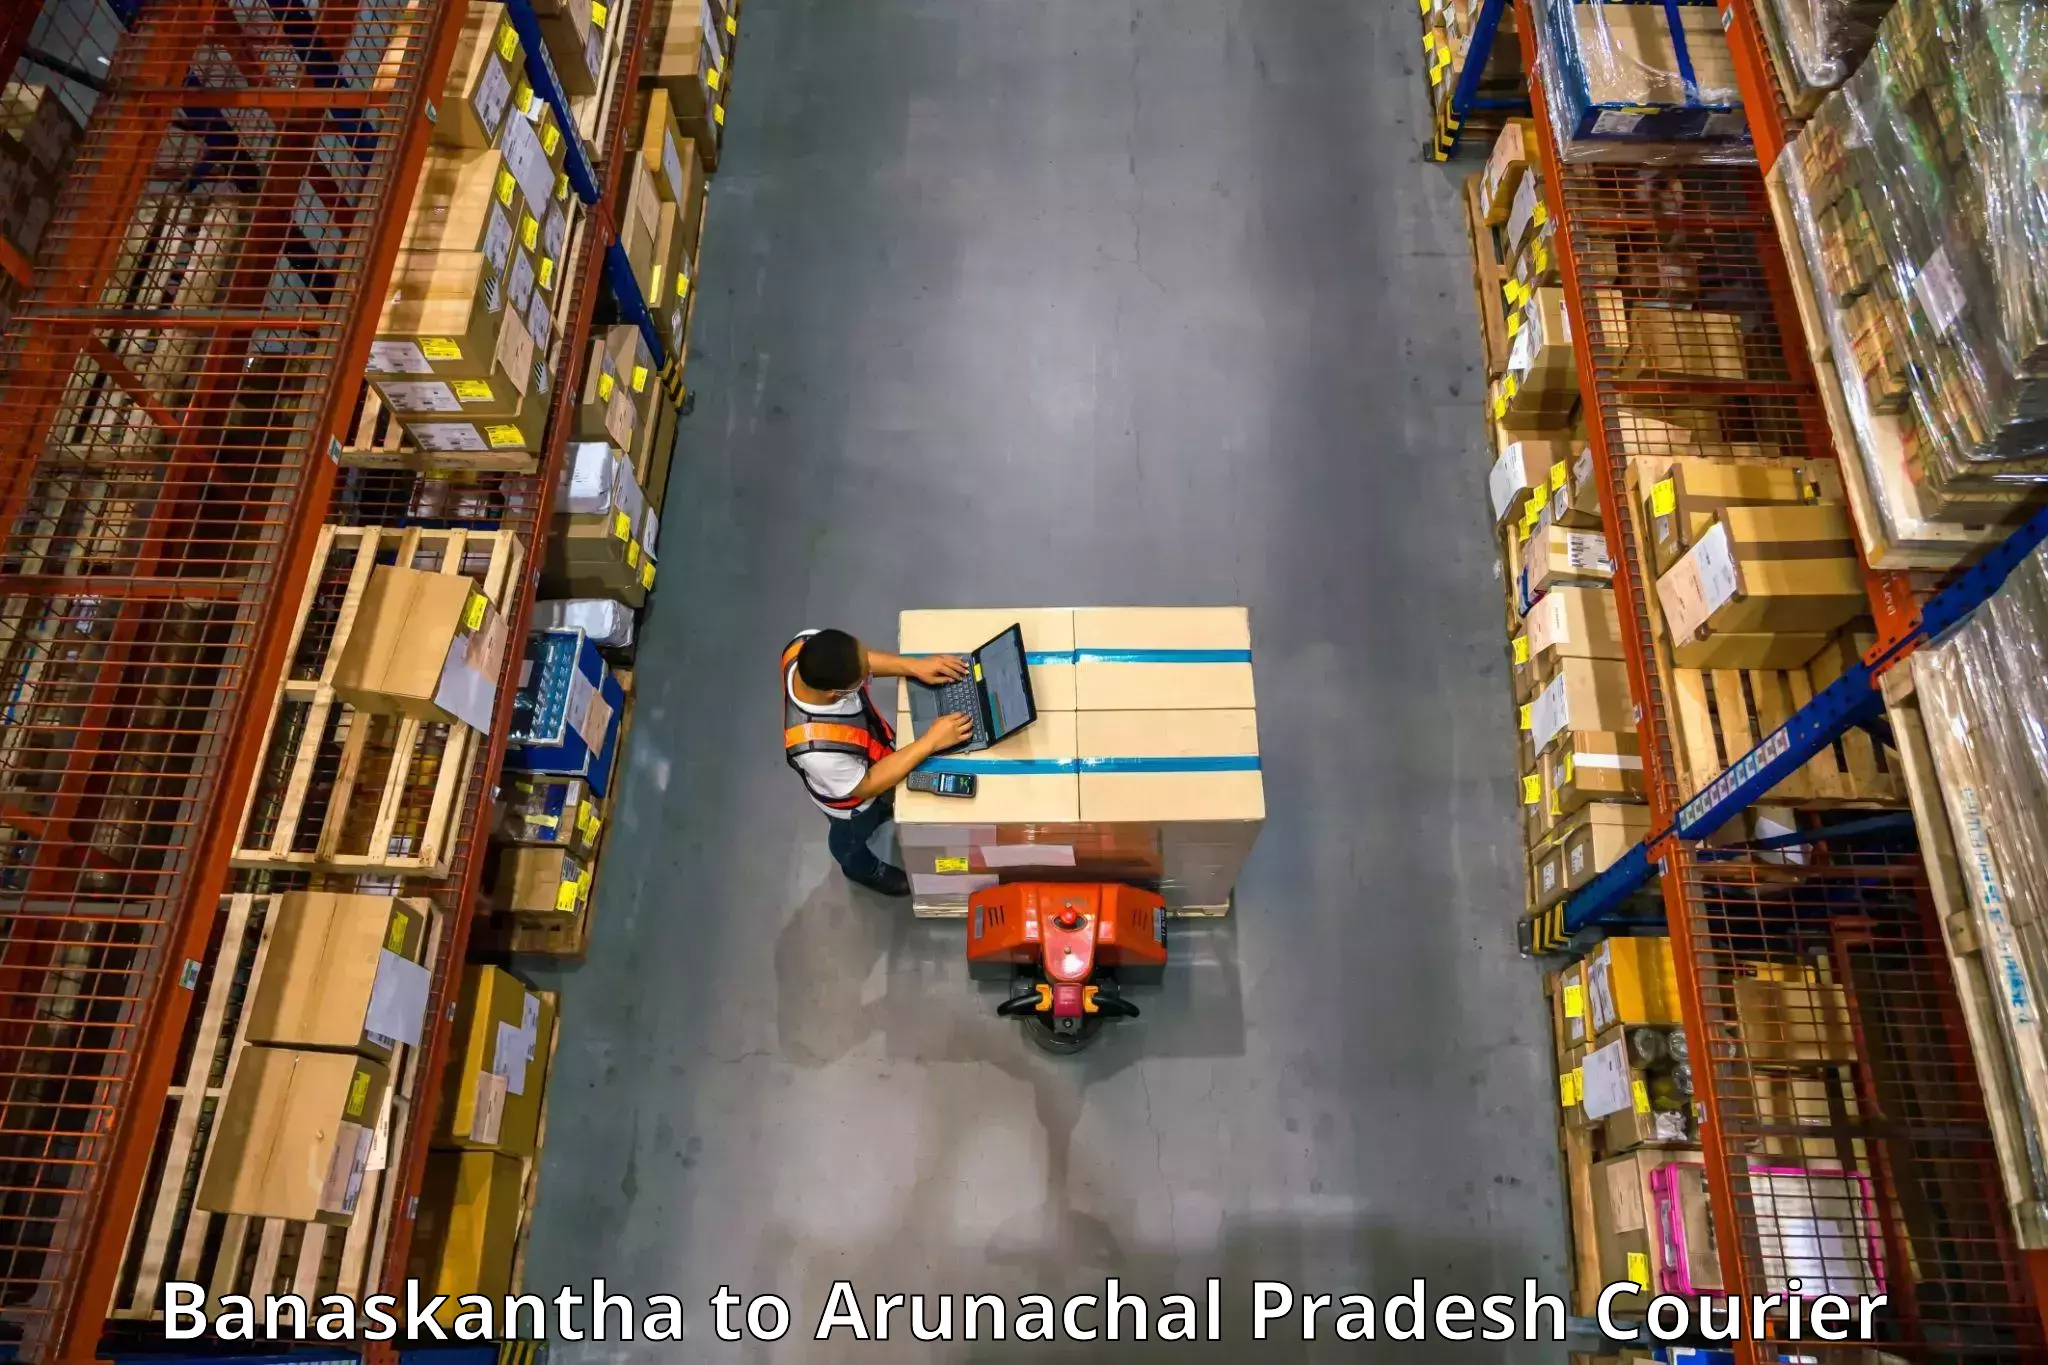 Quality moving and storage Banaskantha to Namsai